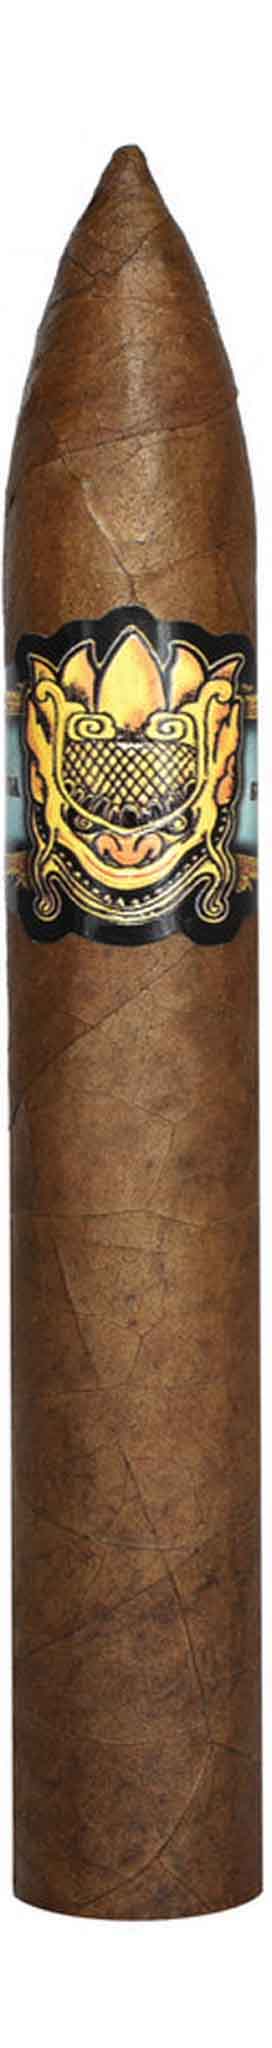 alt-ambrosia-spice-cigars.jpg